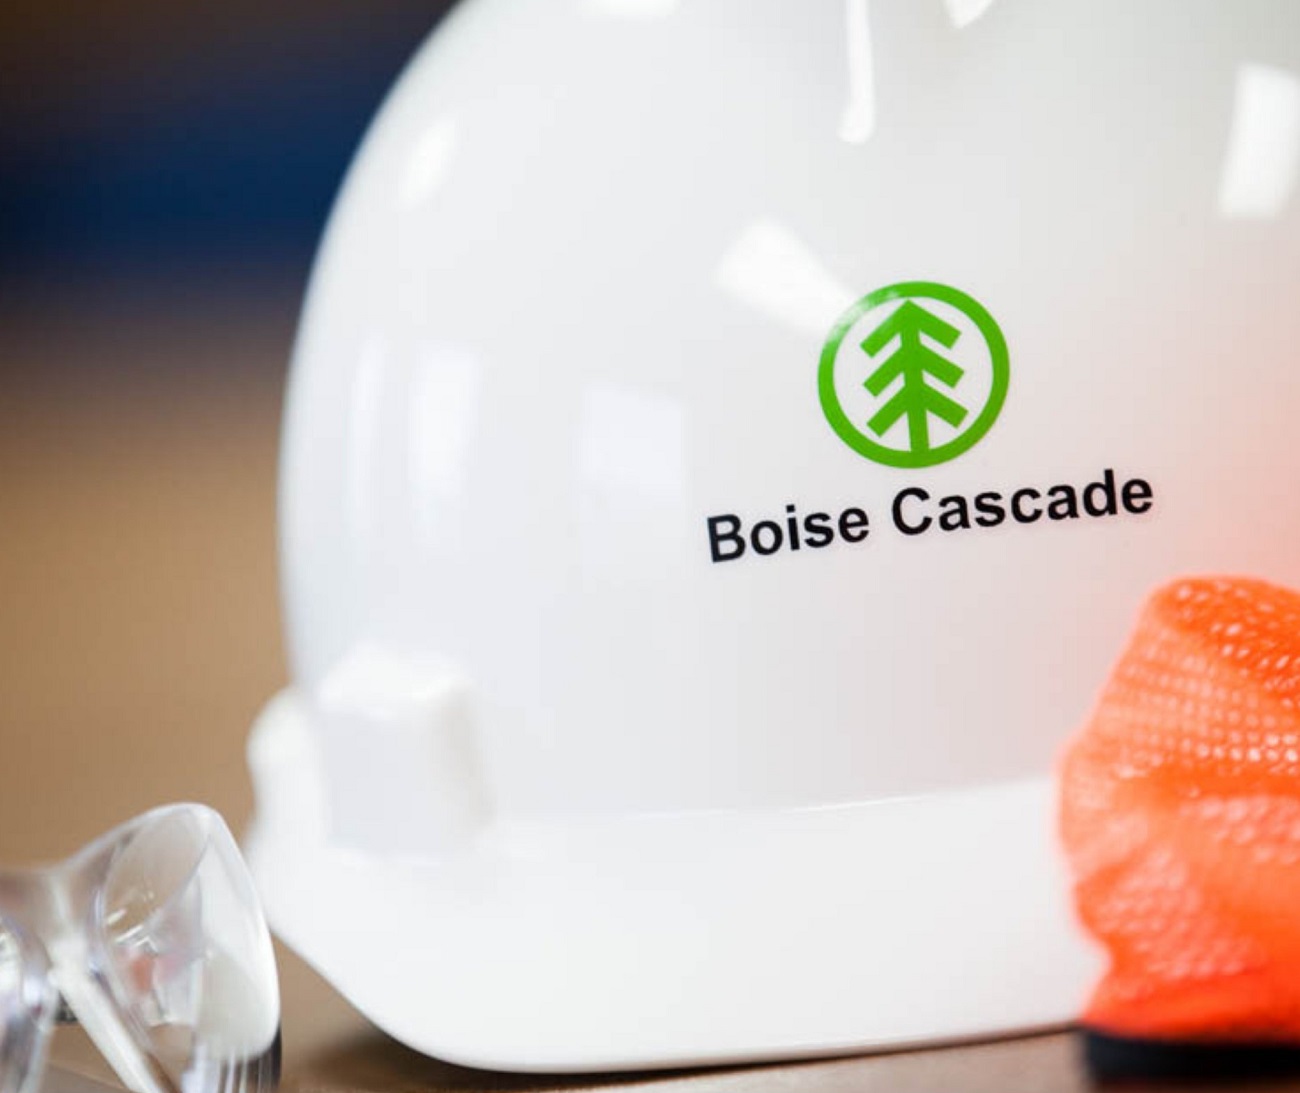 Boise Cascade"s Q1 sales decreased to $1.5 billion